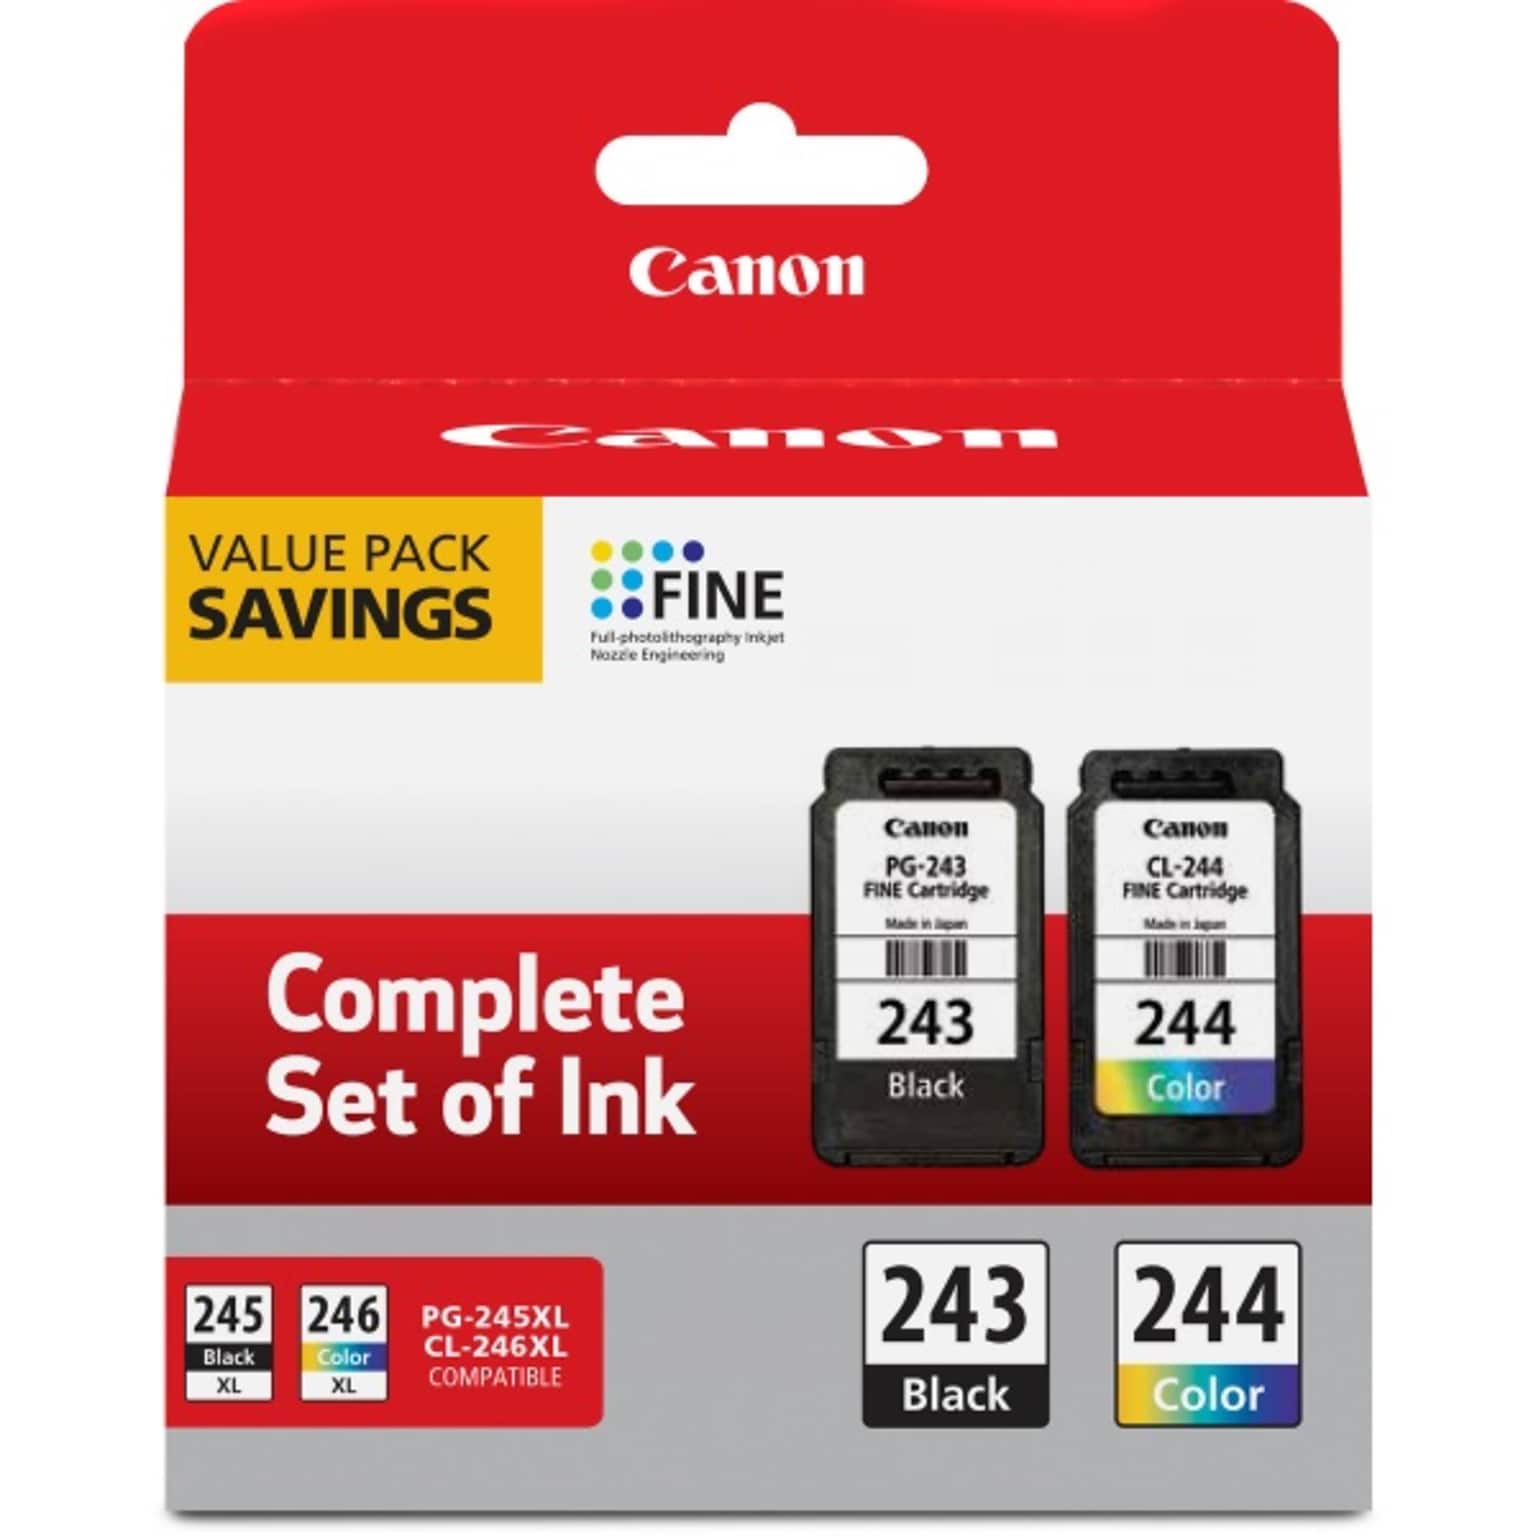 Canon 1287C006 (Pigment Black/Dye Based Color) Ink Cartridge Value Pack